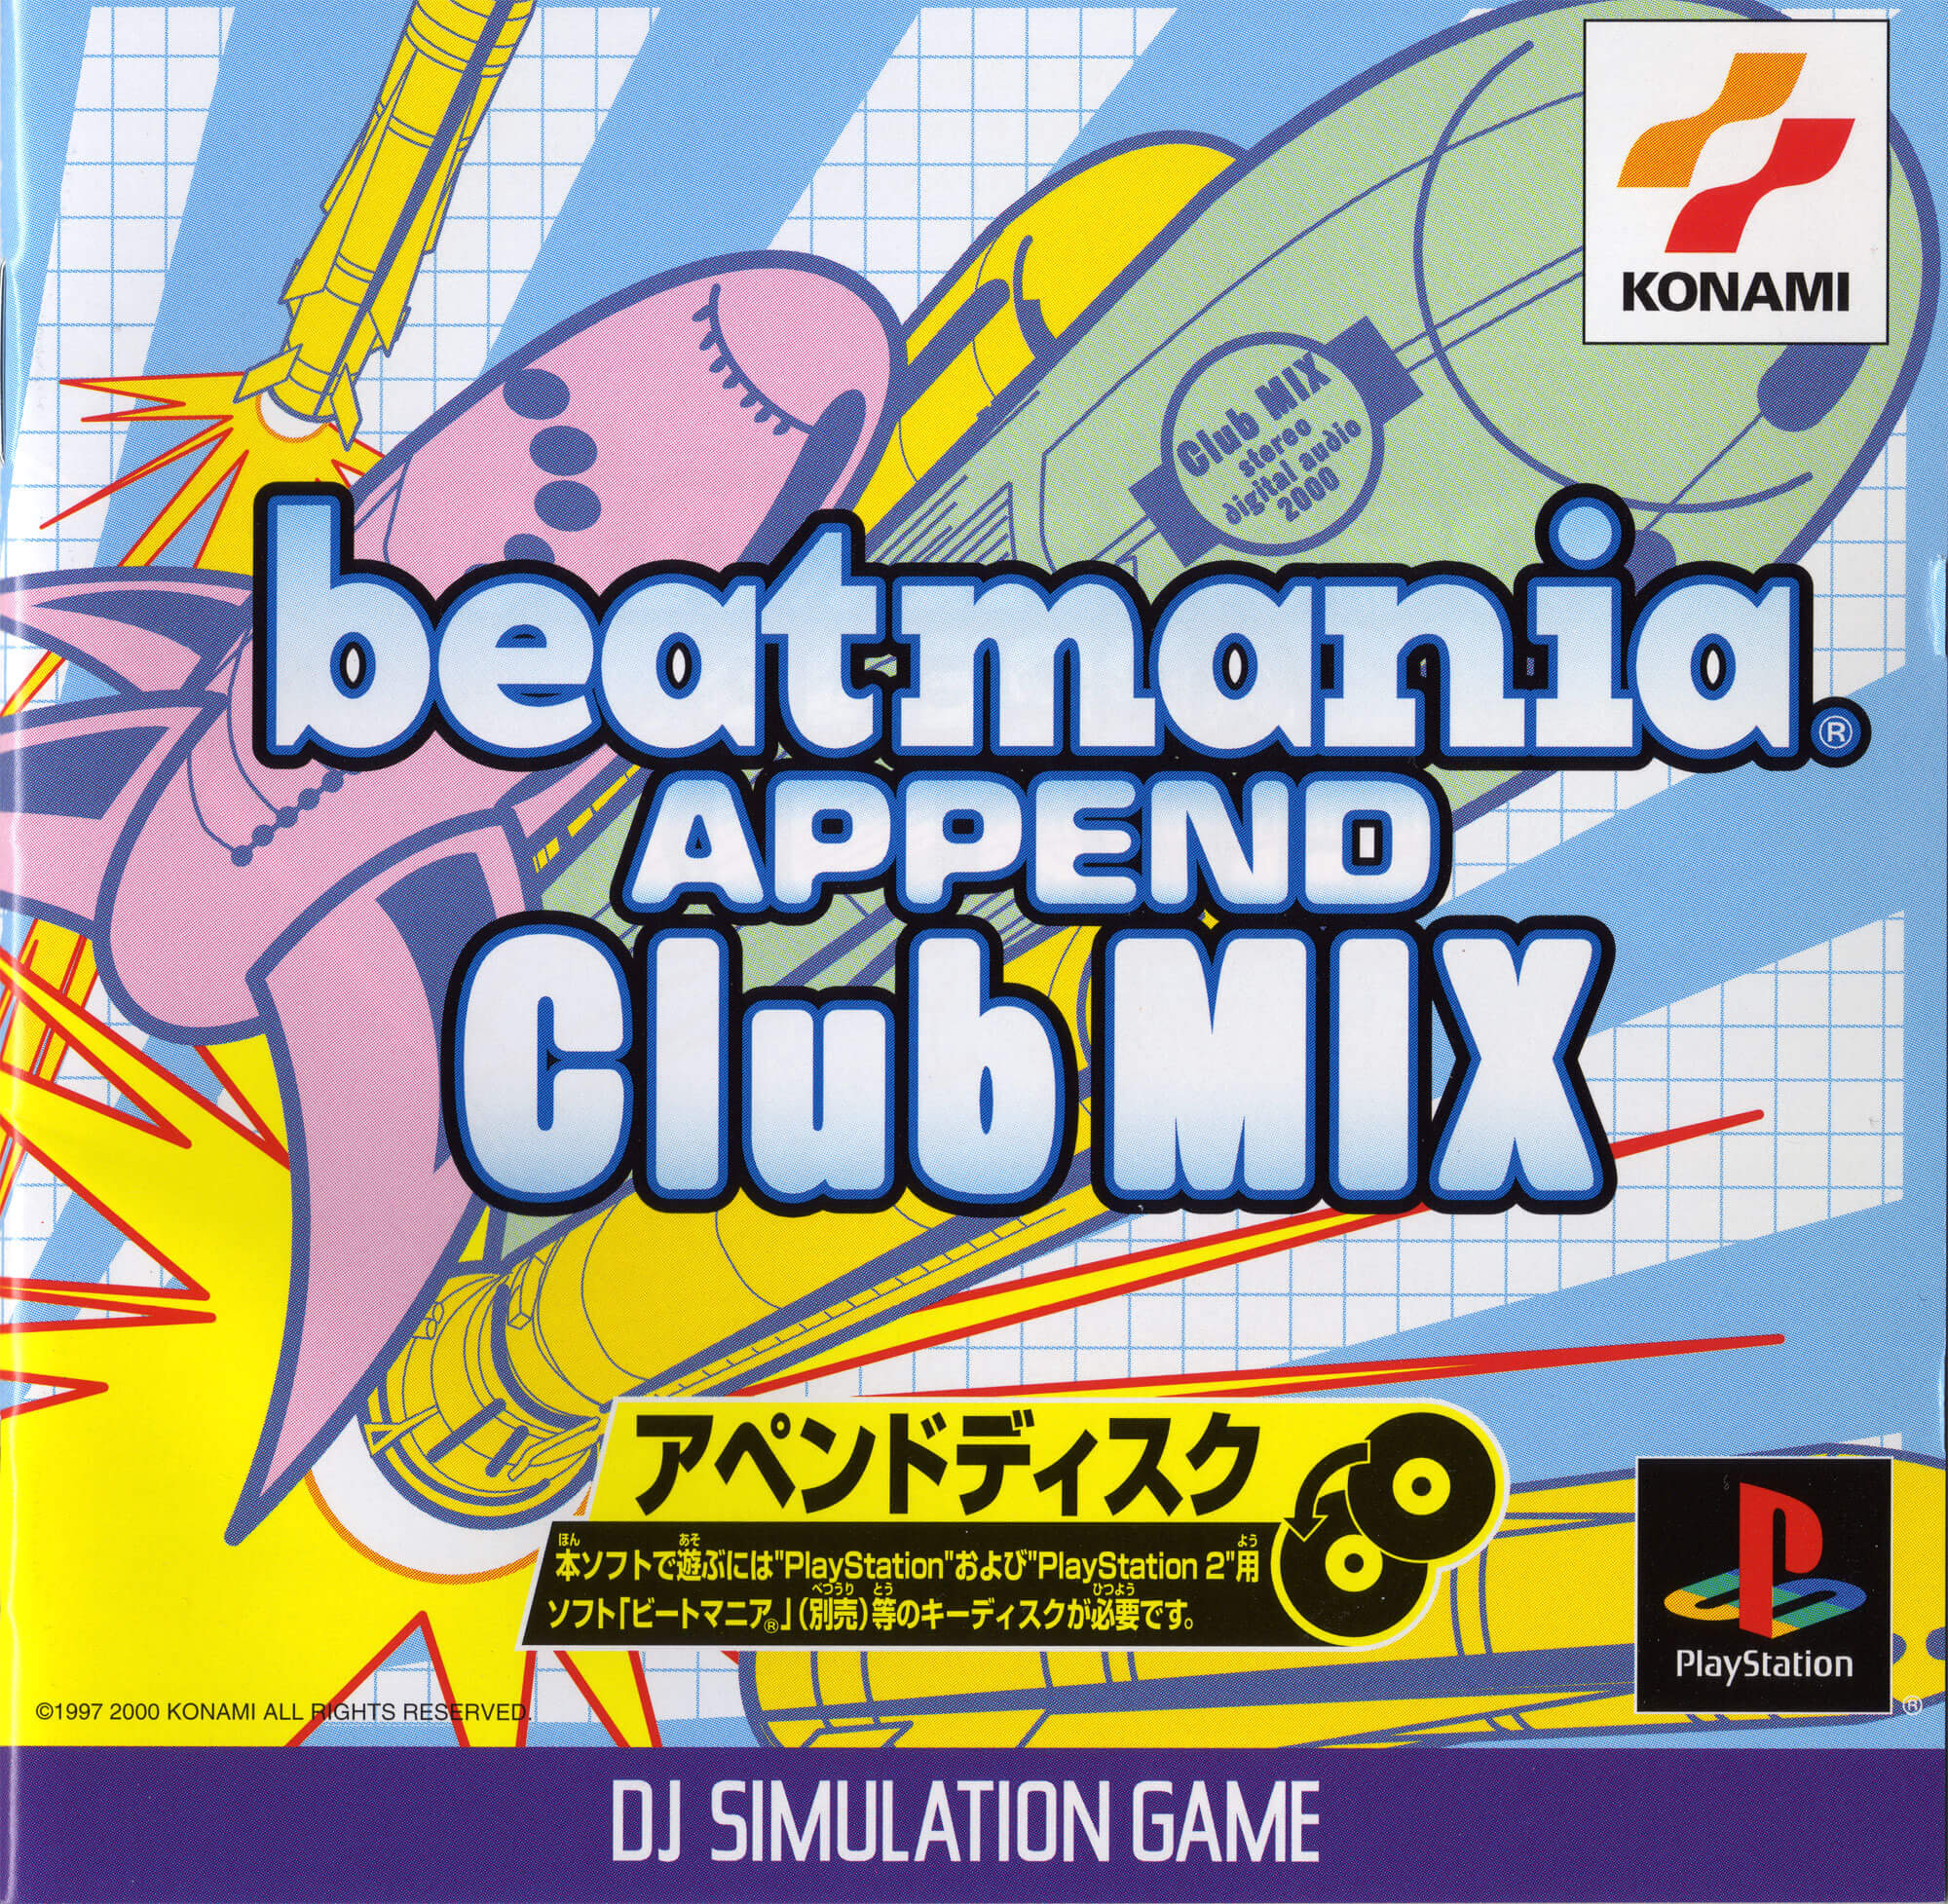 Beatmania: Append Club Mix